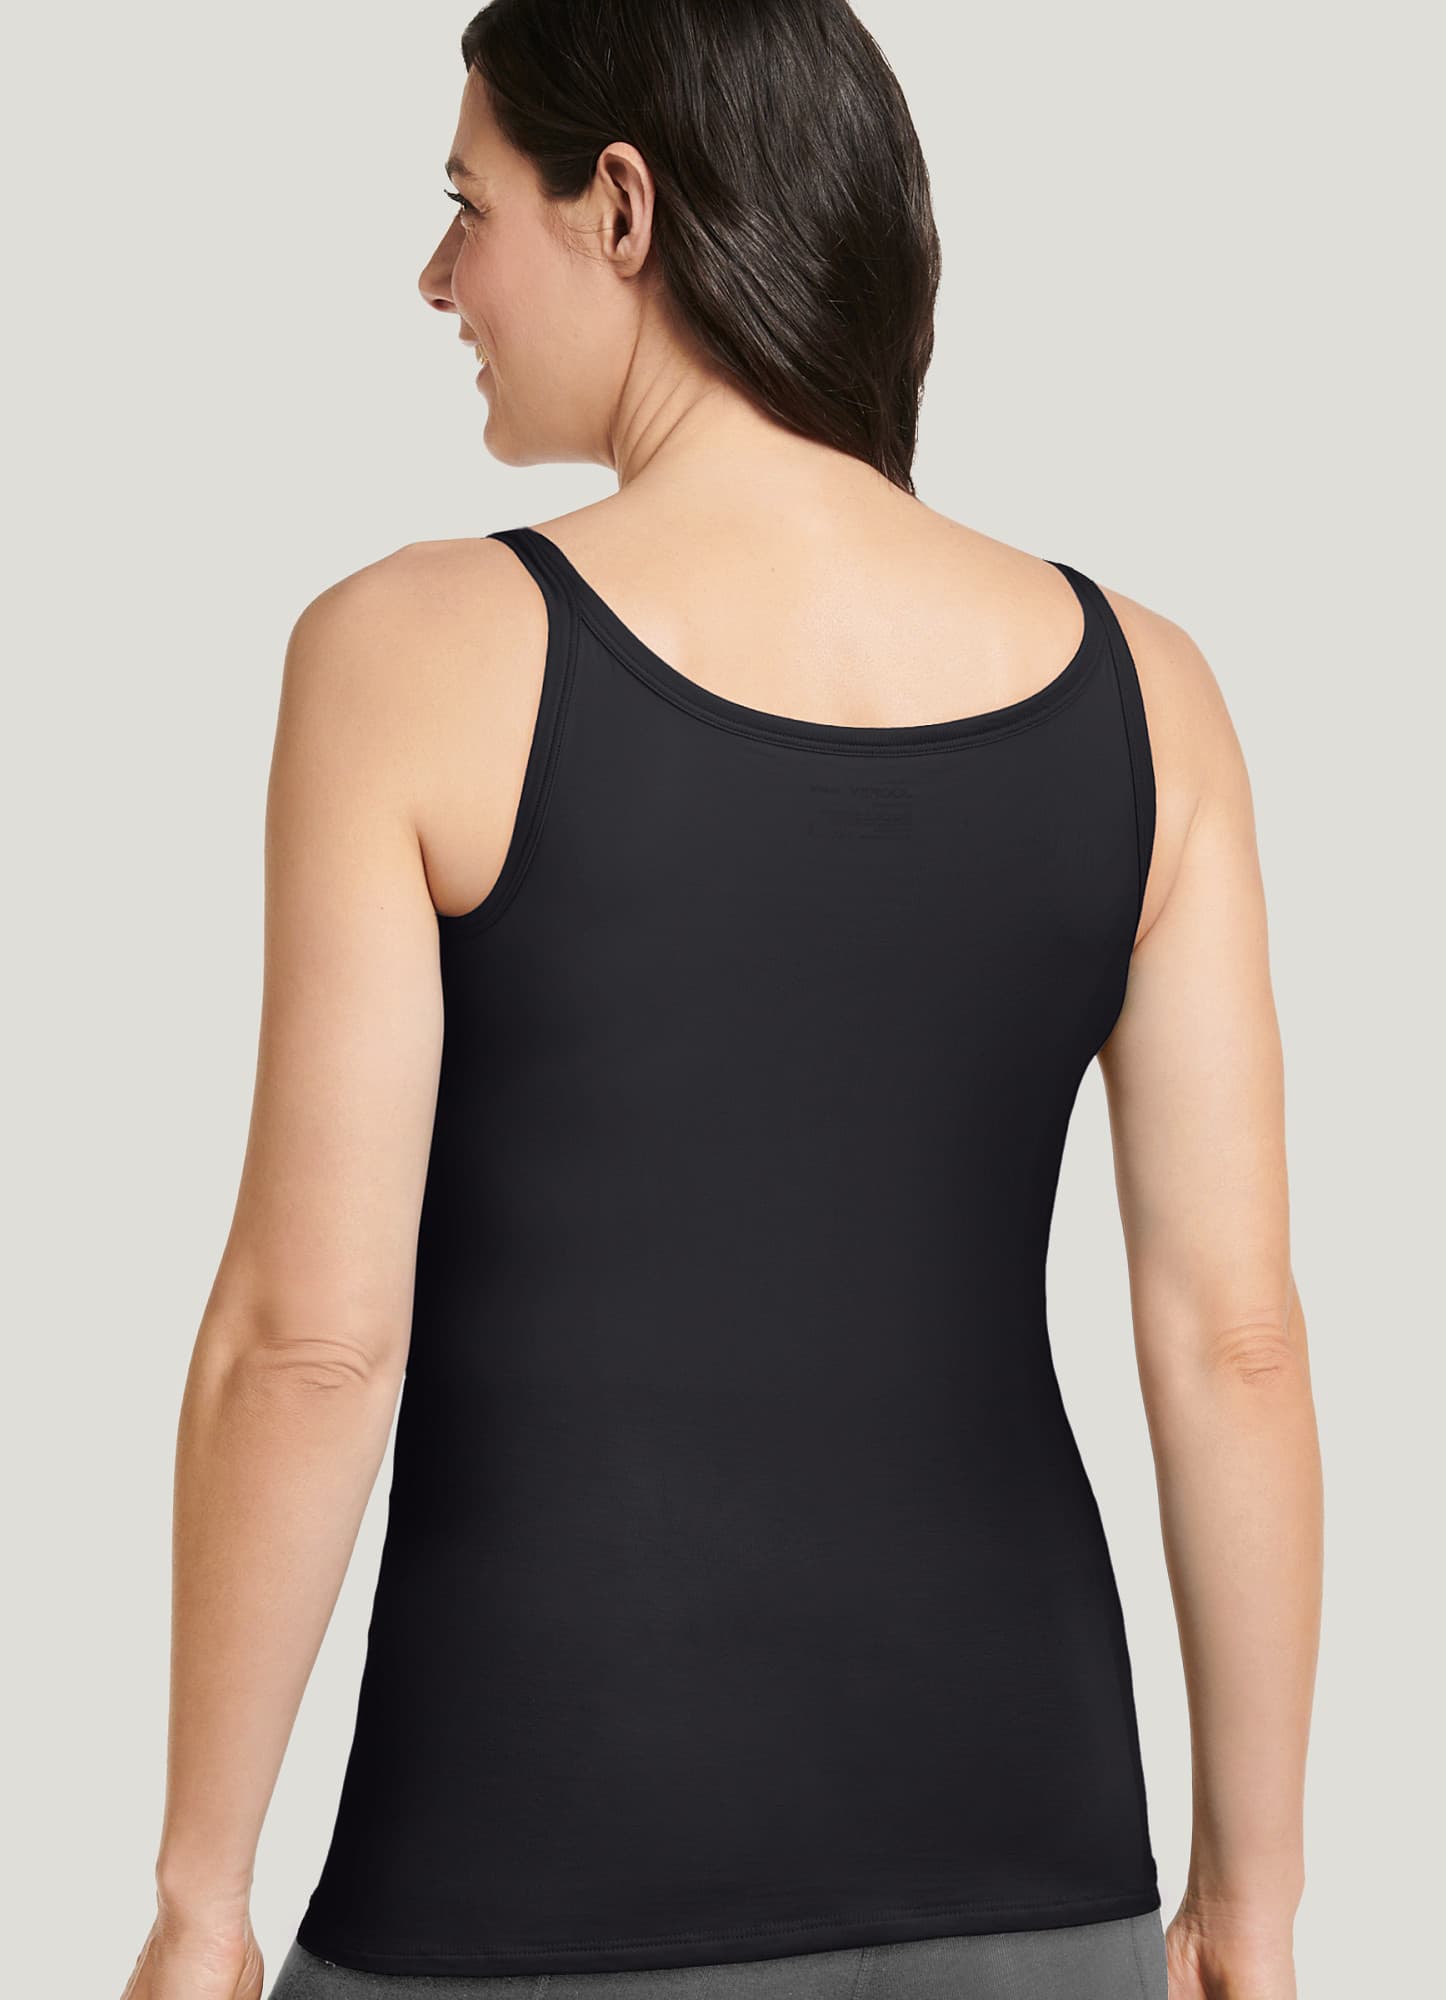 Jockey Essentials Women's Seamfree Slimming Tank Top Shirt Small Beige